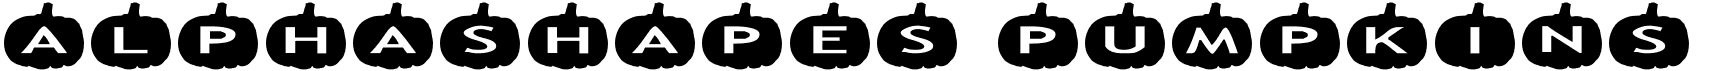 preview image of the AlphaShapes pumpkins font